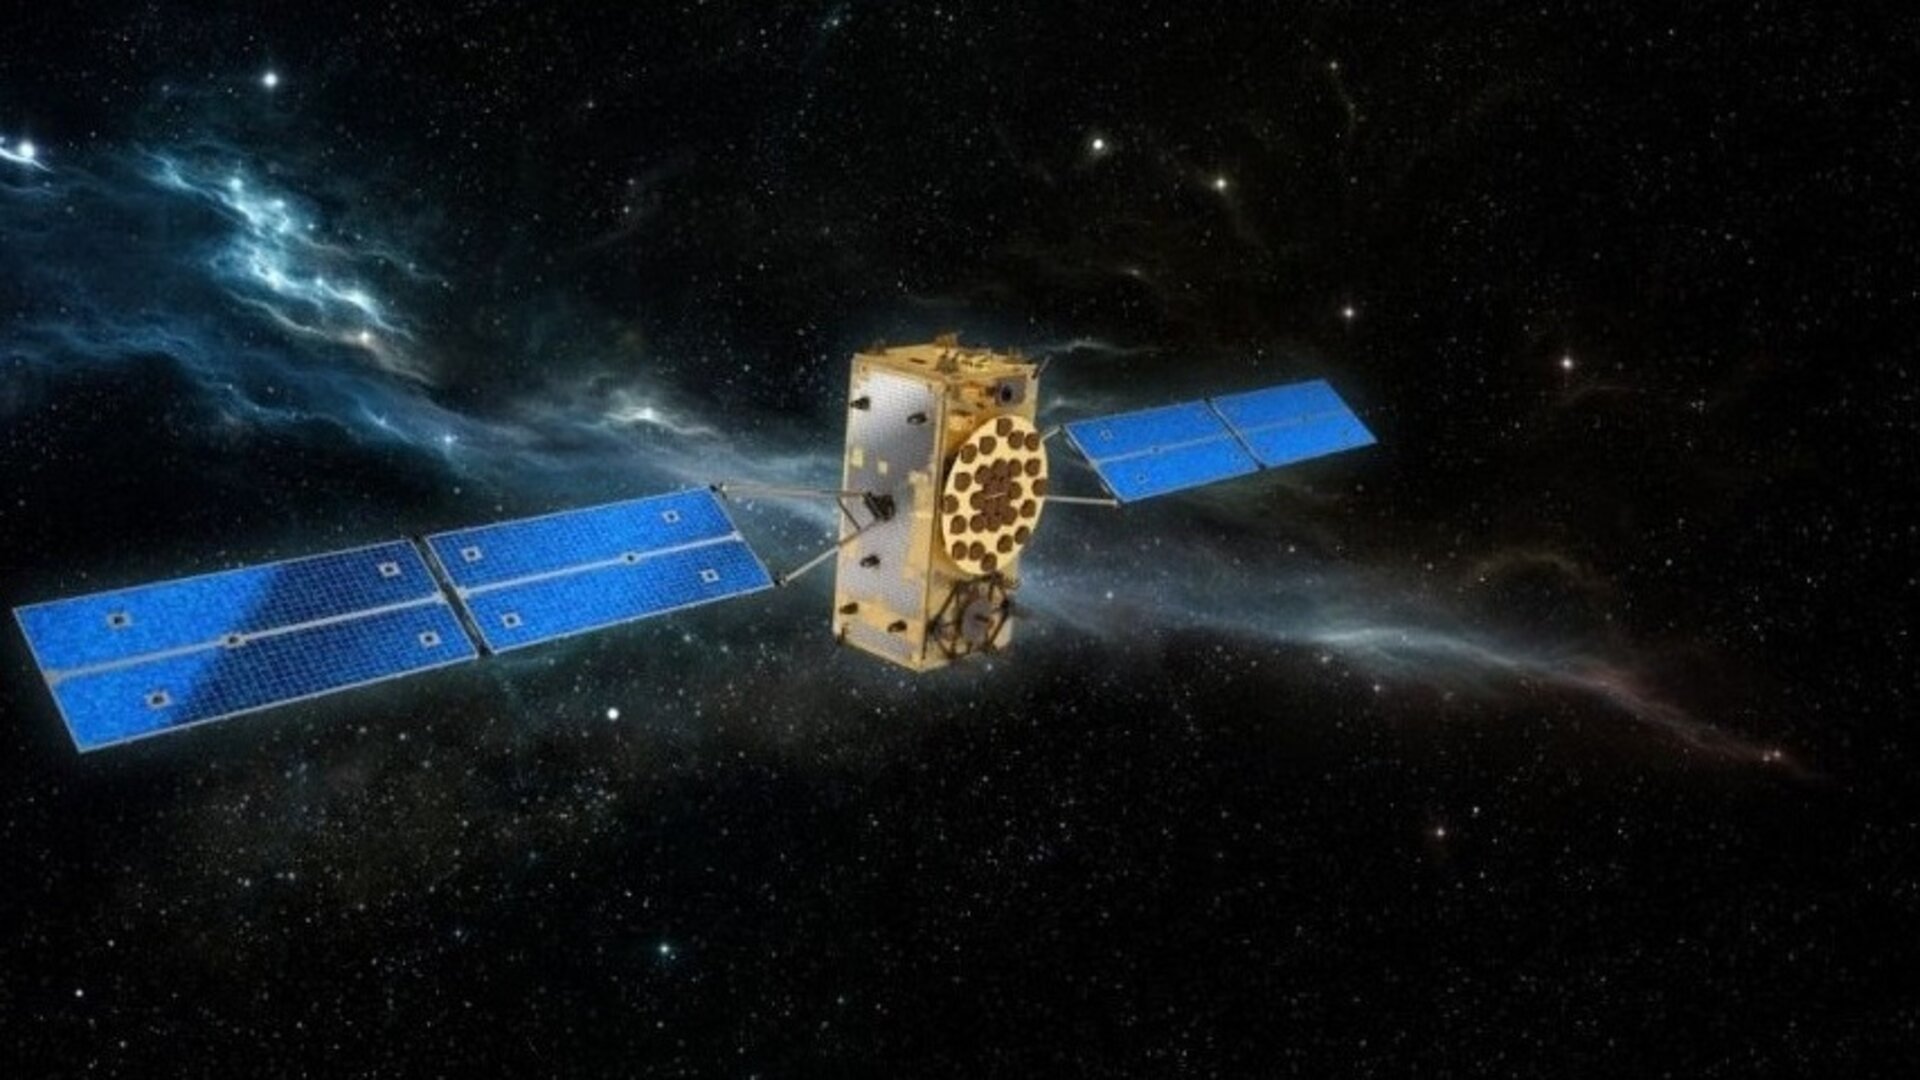 Družice systému Galileo